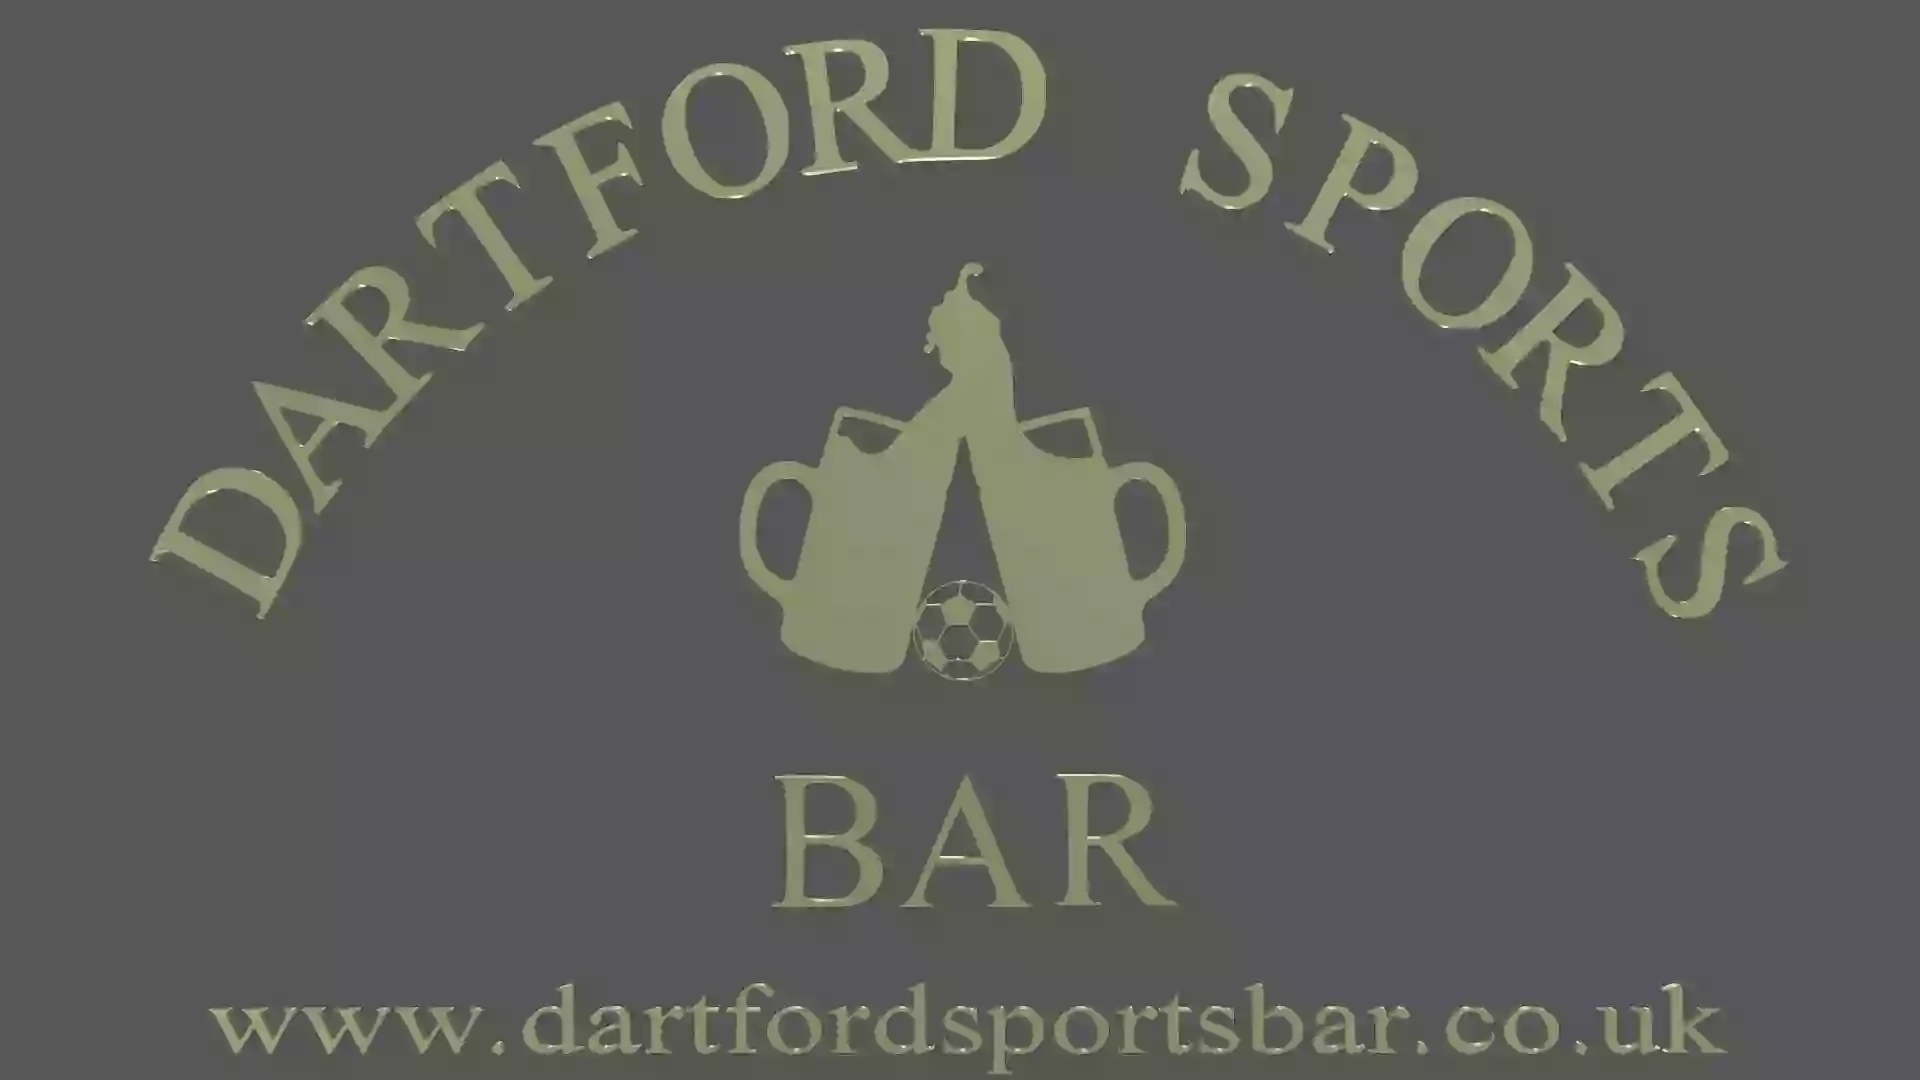 The Dartford Sports Bar